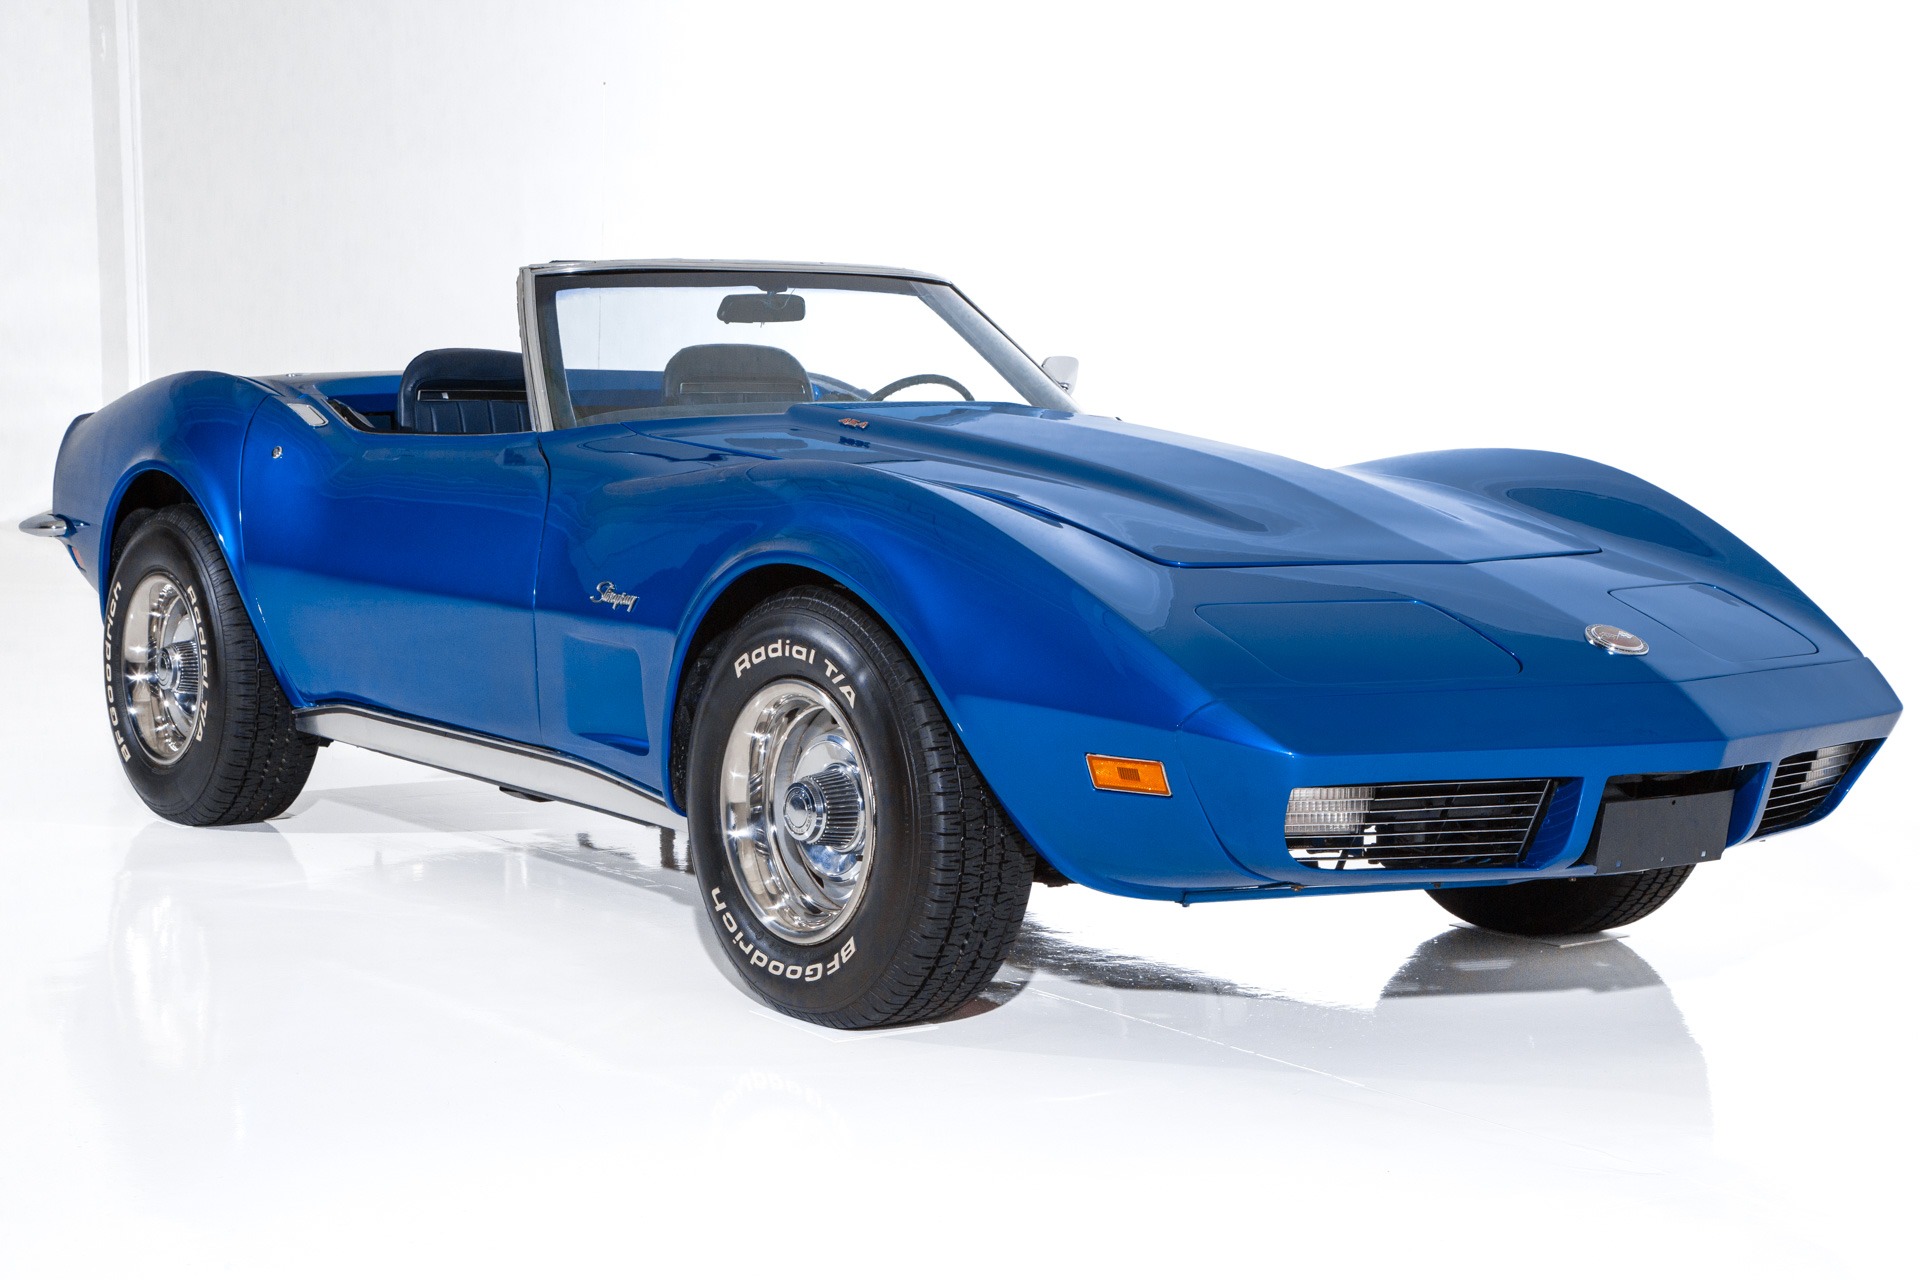 For Sale Used 1973 Chevrolet Corvette #s match 454ci  PS PB AC | American Dream Machines Des Moines IA 50309